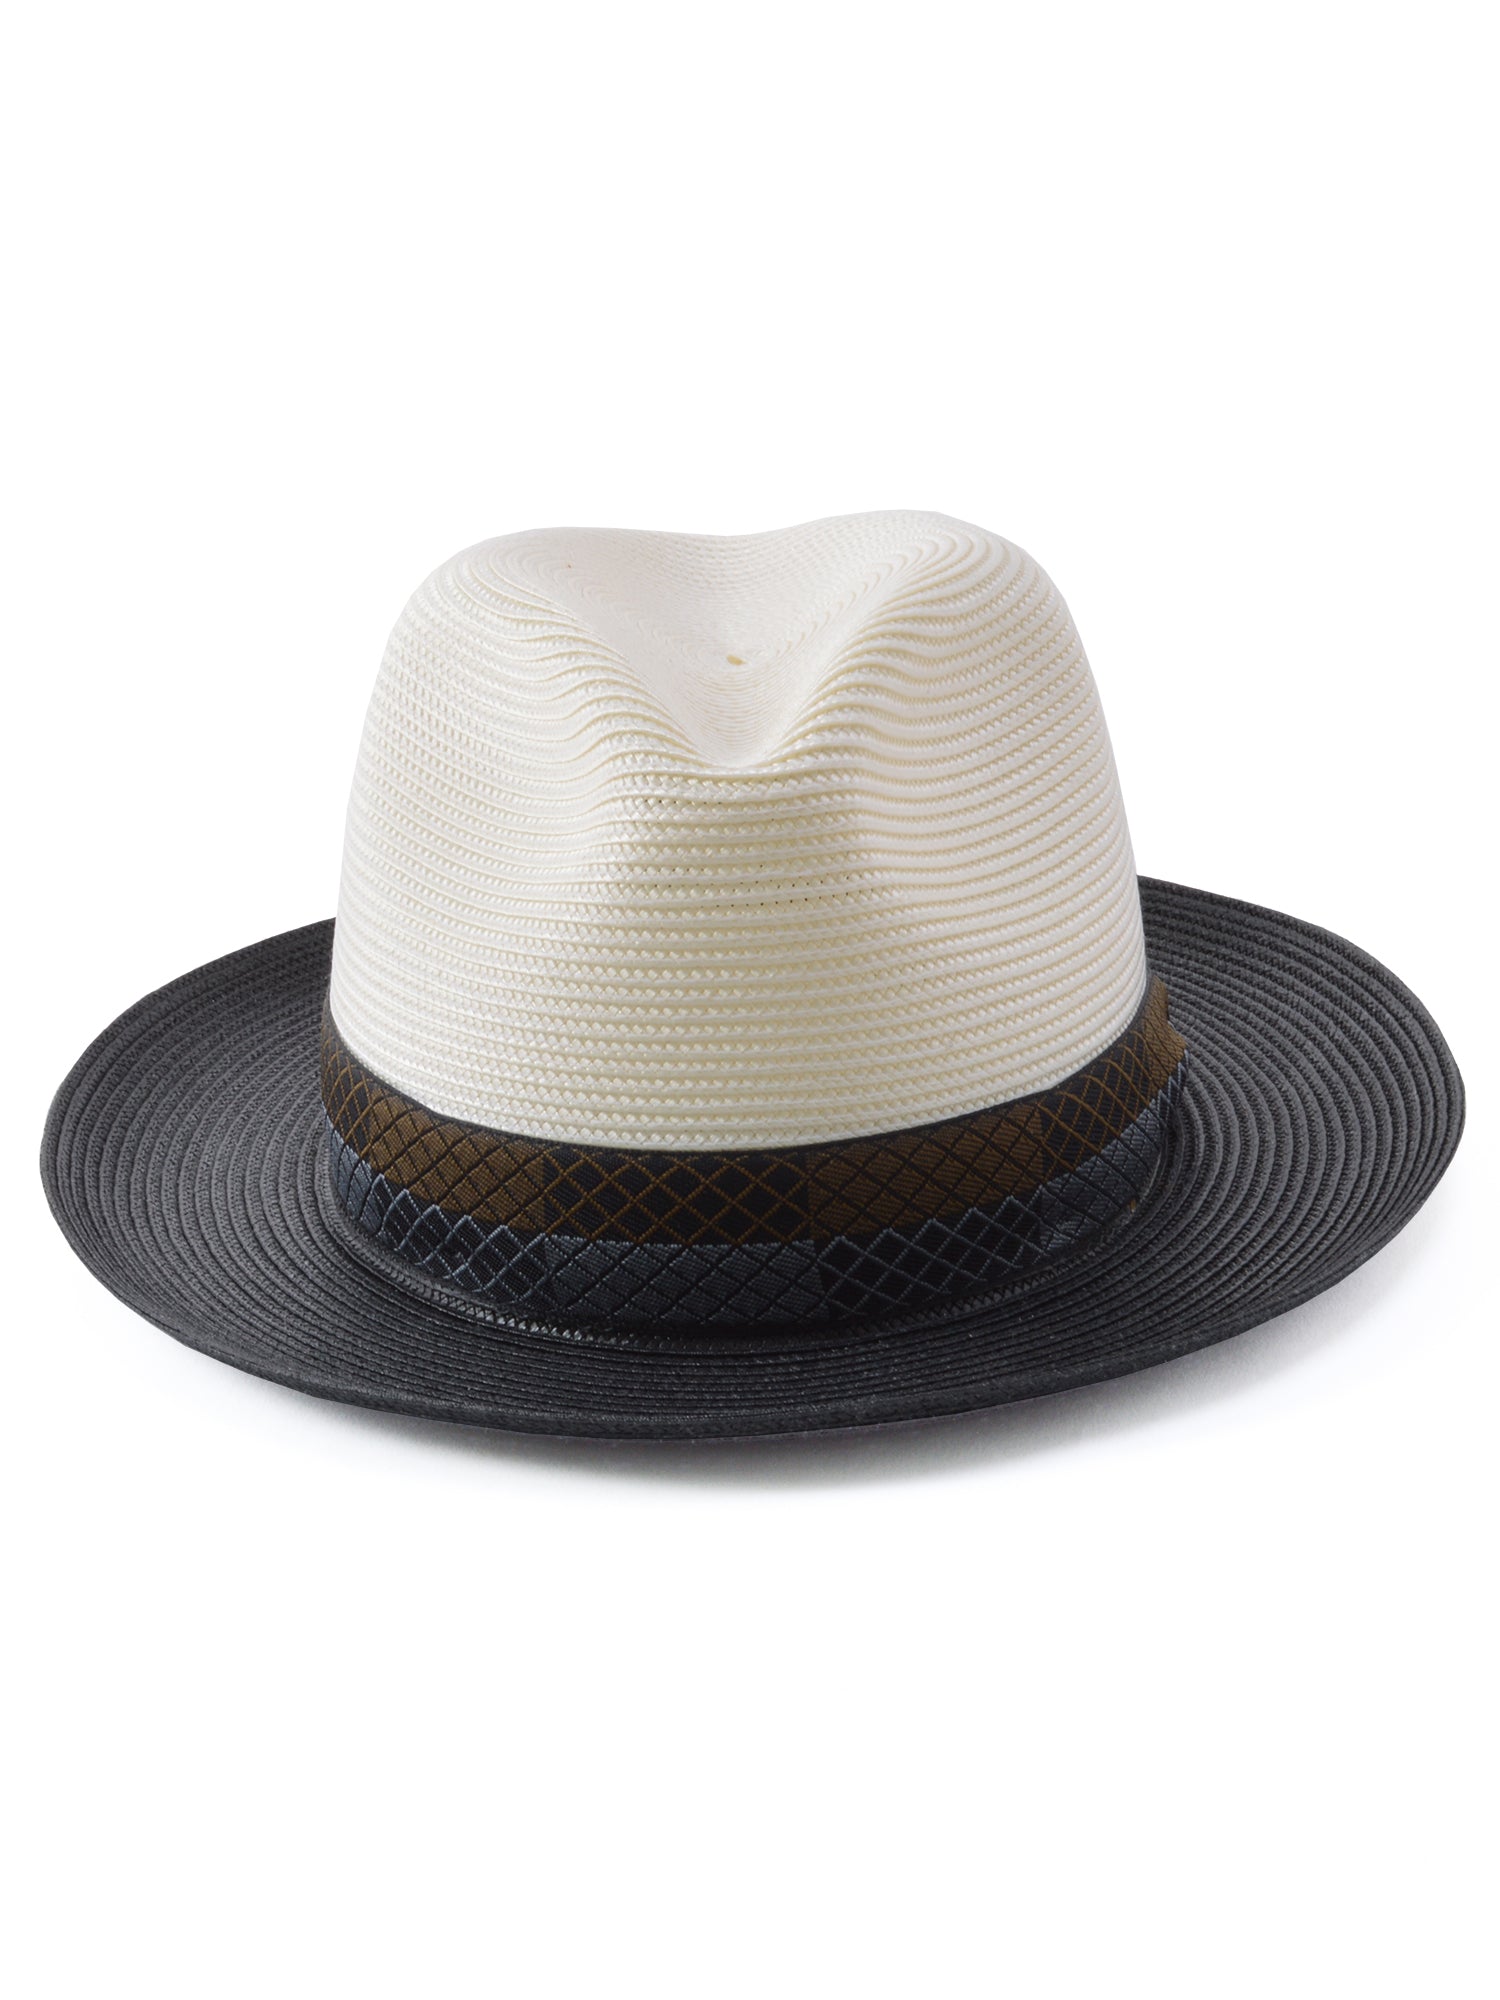 Stetson Andover Florentine Milan Straw Hat in Ivory/Black - 0